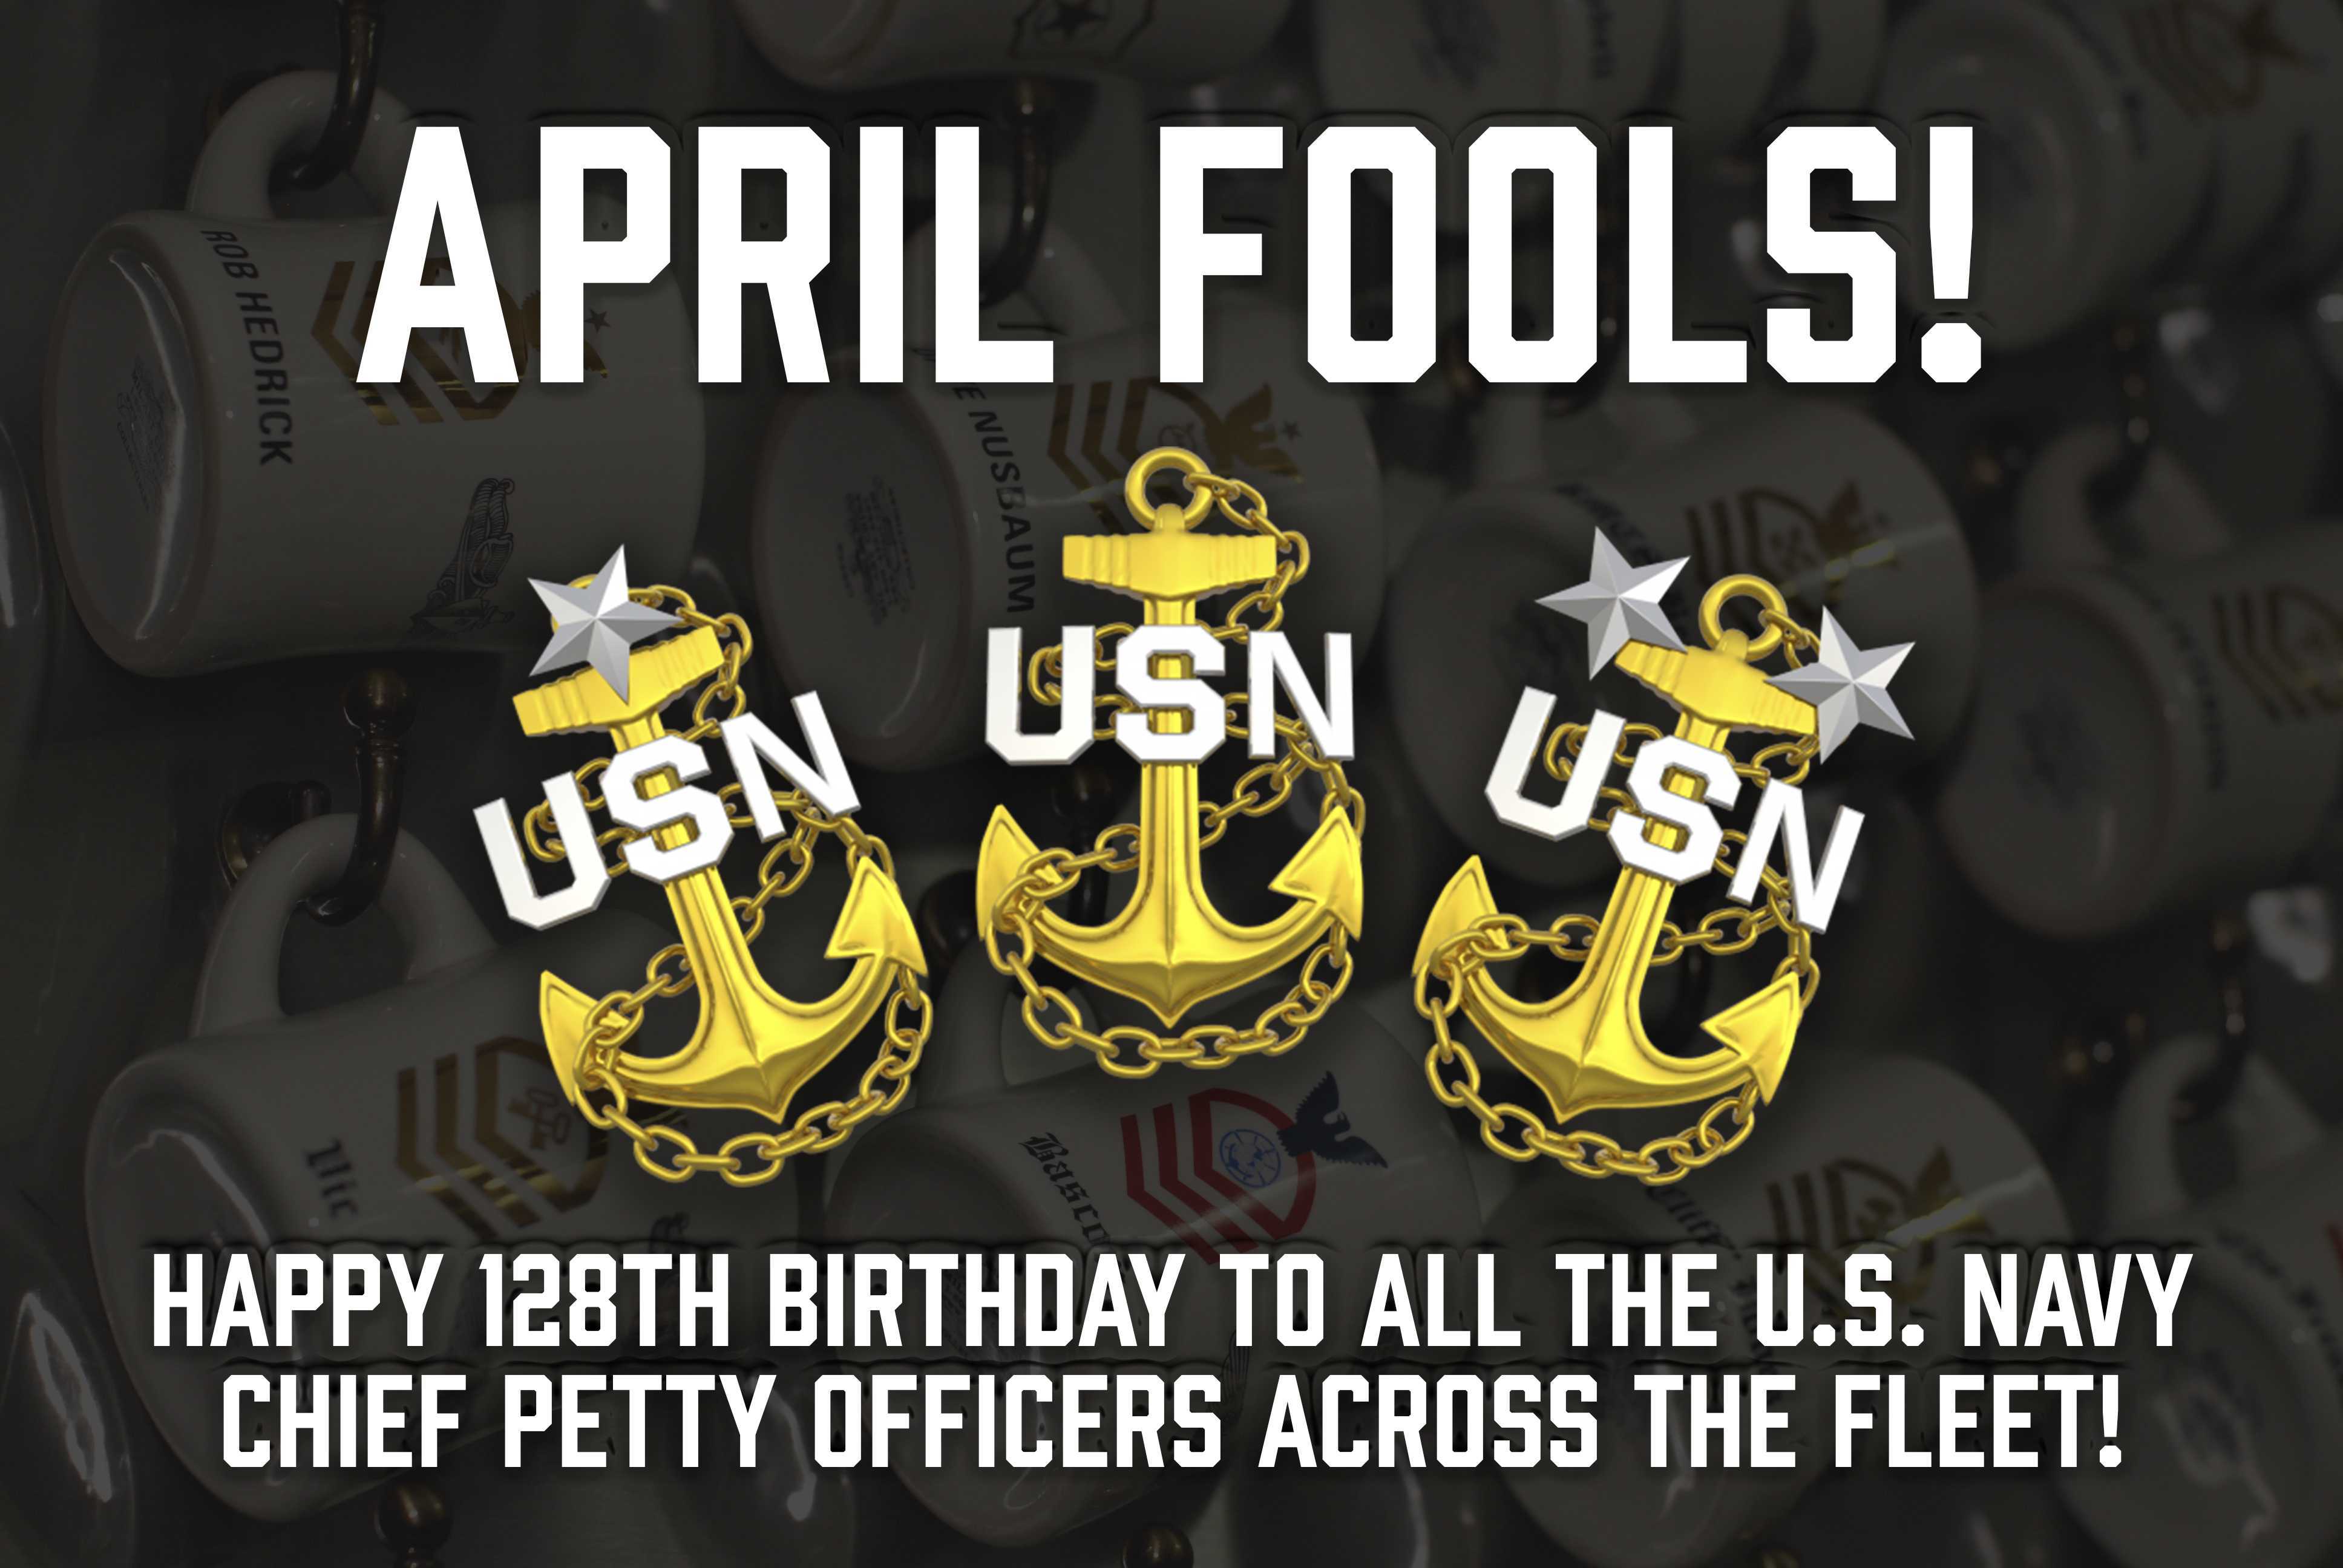 Army vs. Navy April Fool’s 2021 posts